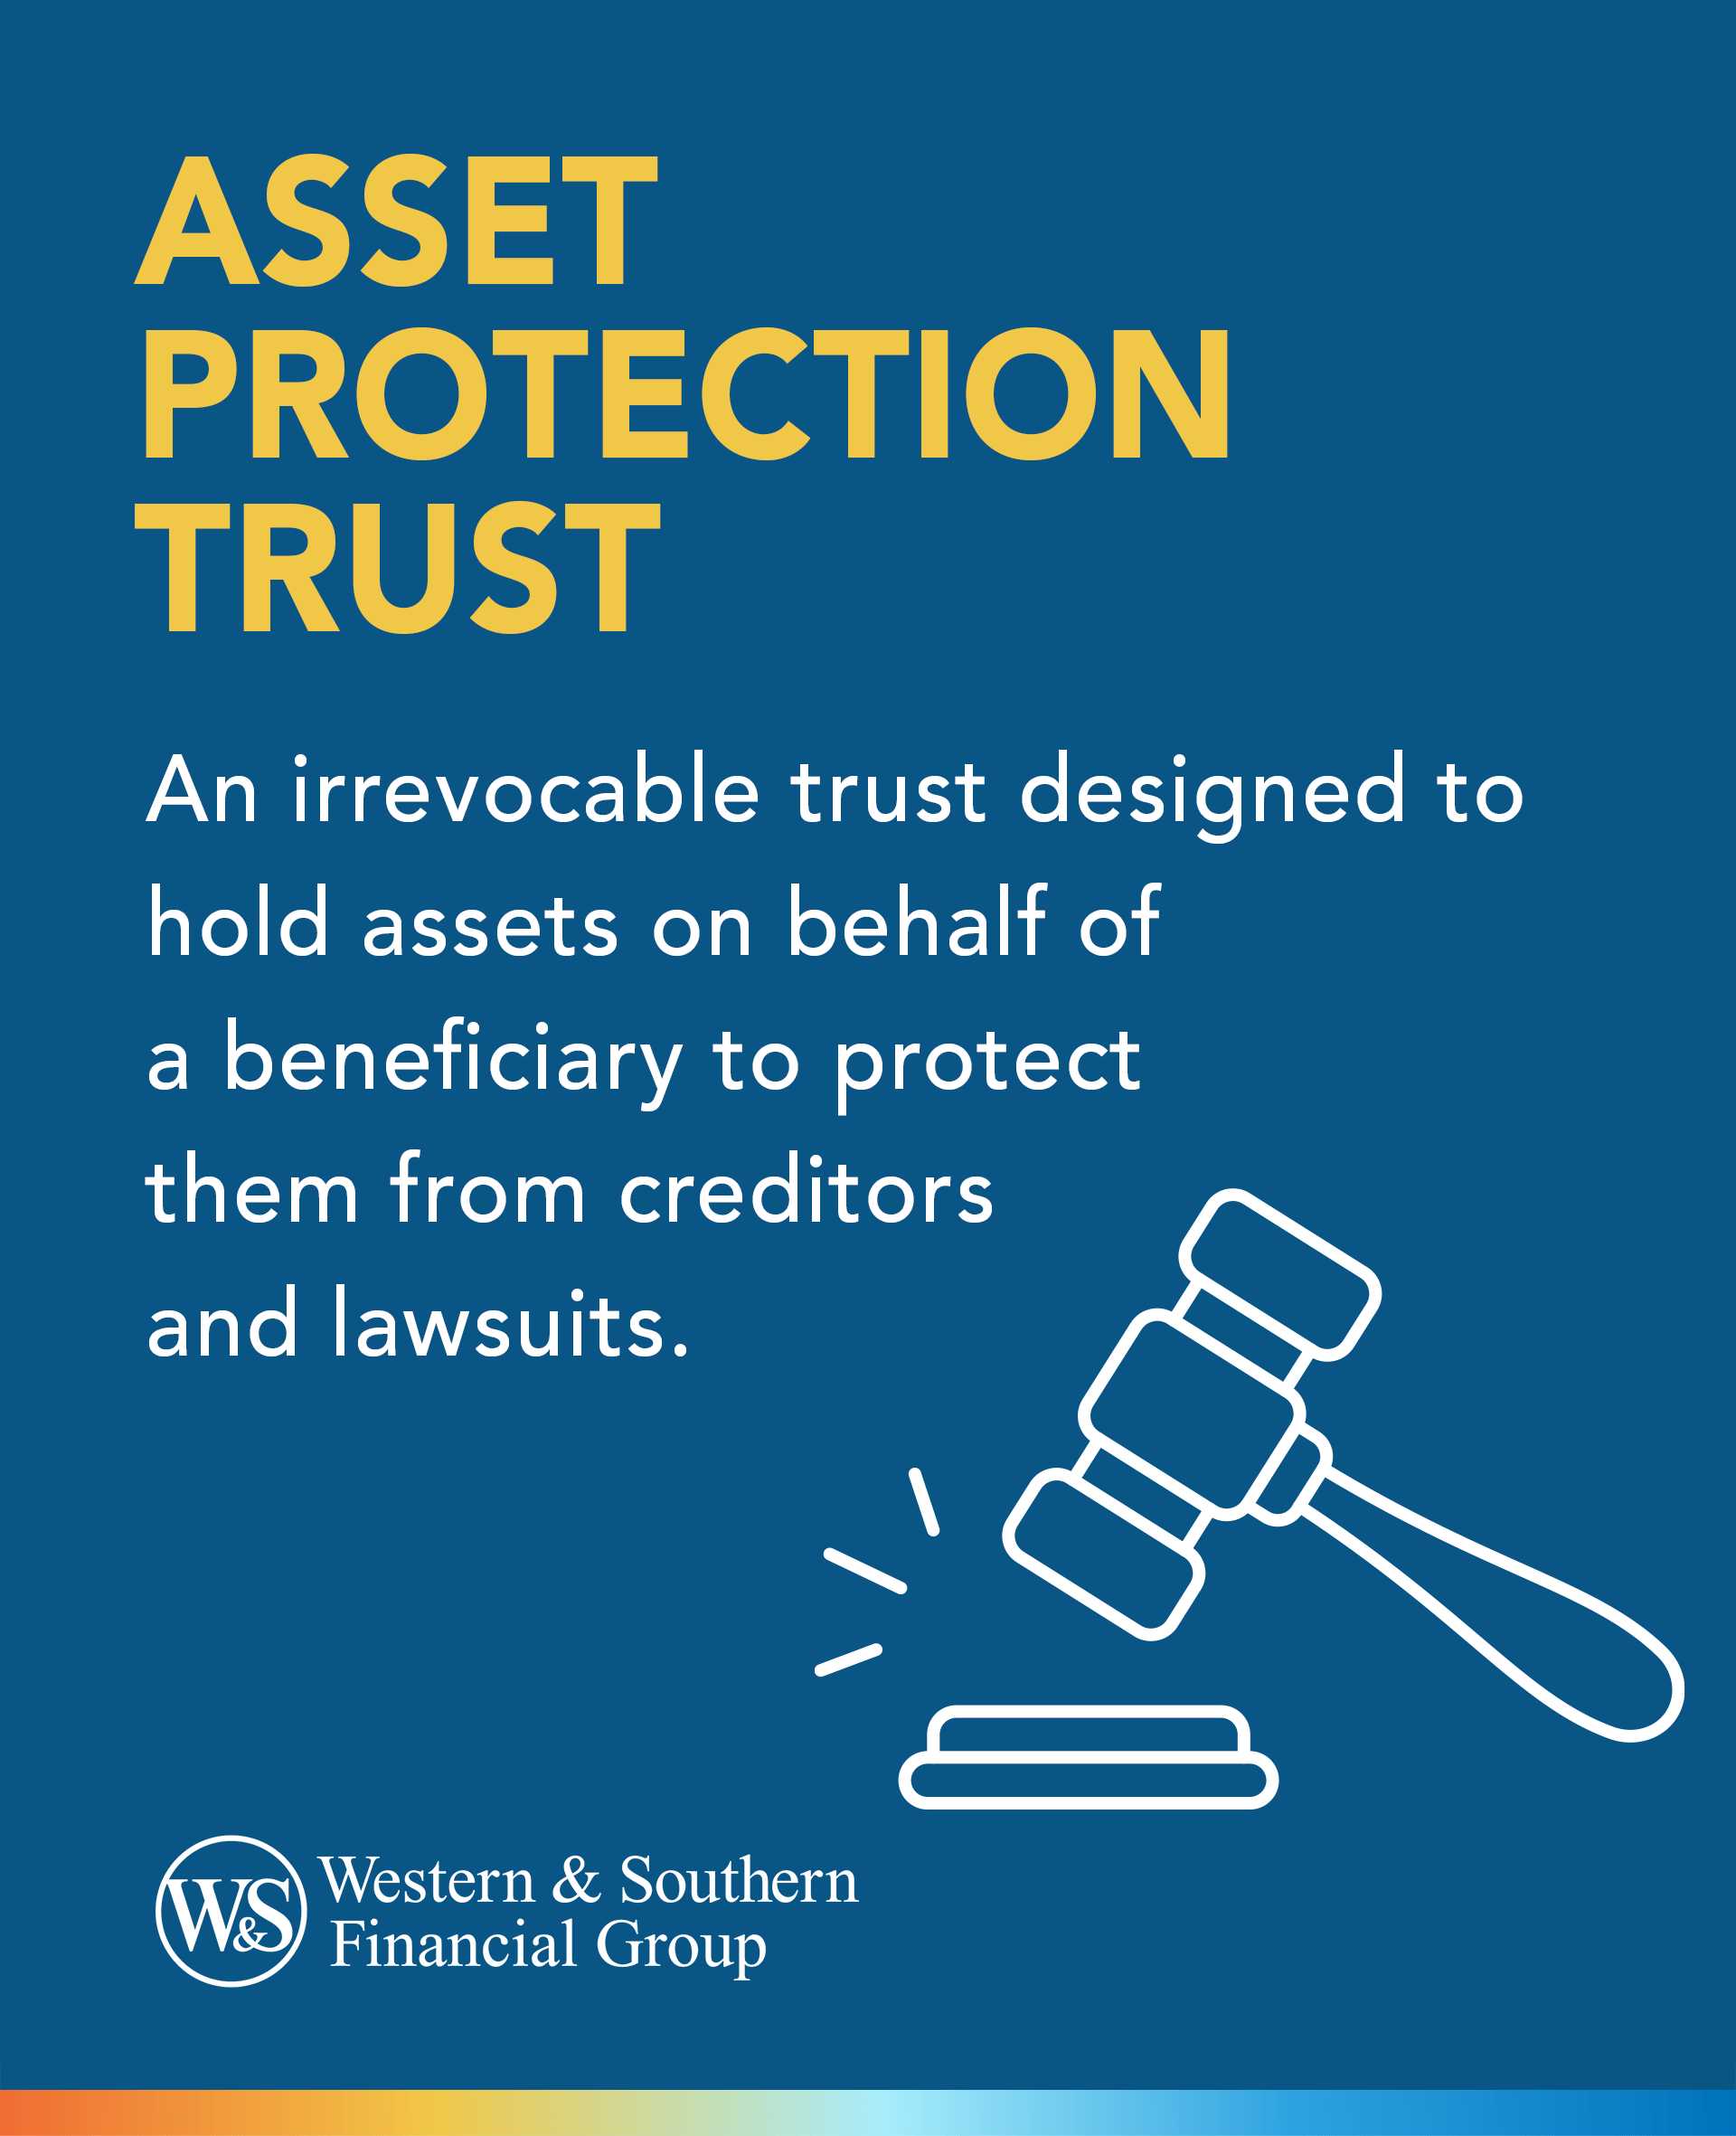 Asset Protection Trust Definition